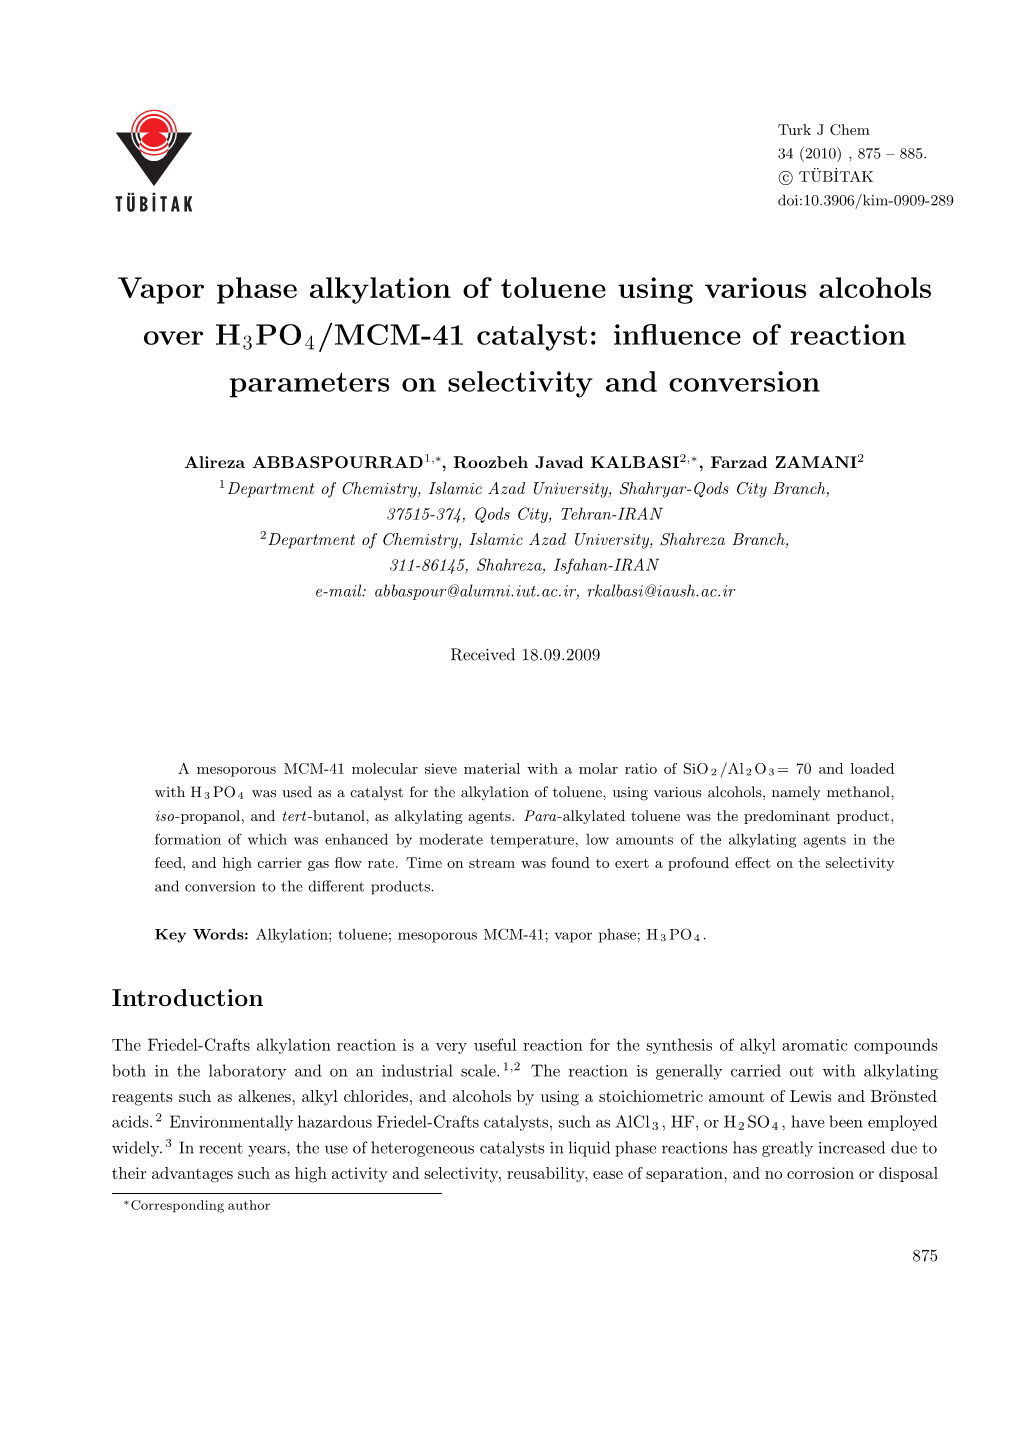 Vapor Phase Alkylation of Toluene Using Various Alcohols Over H3PO4